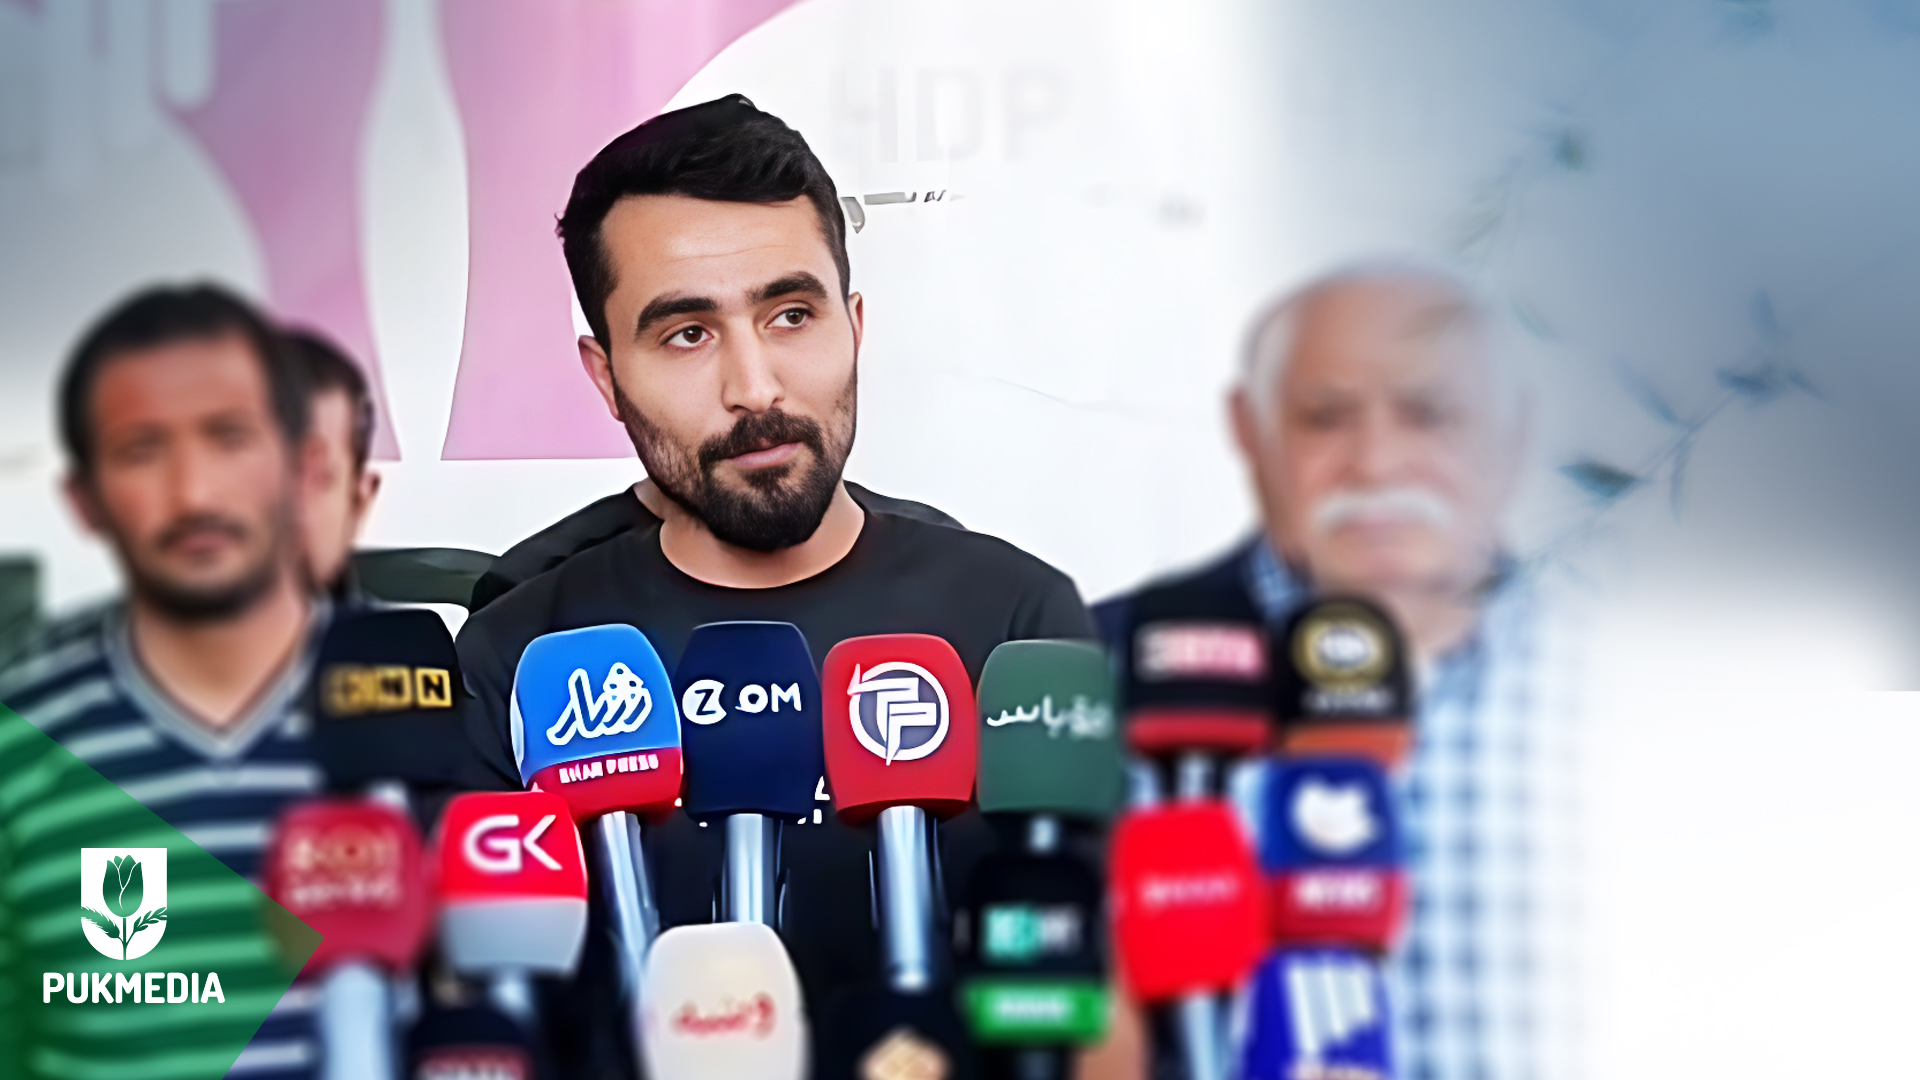  HDP Representatives' press conference